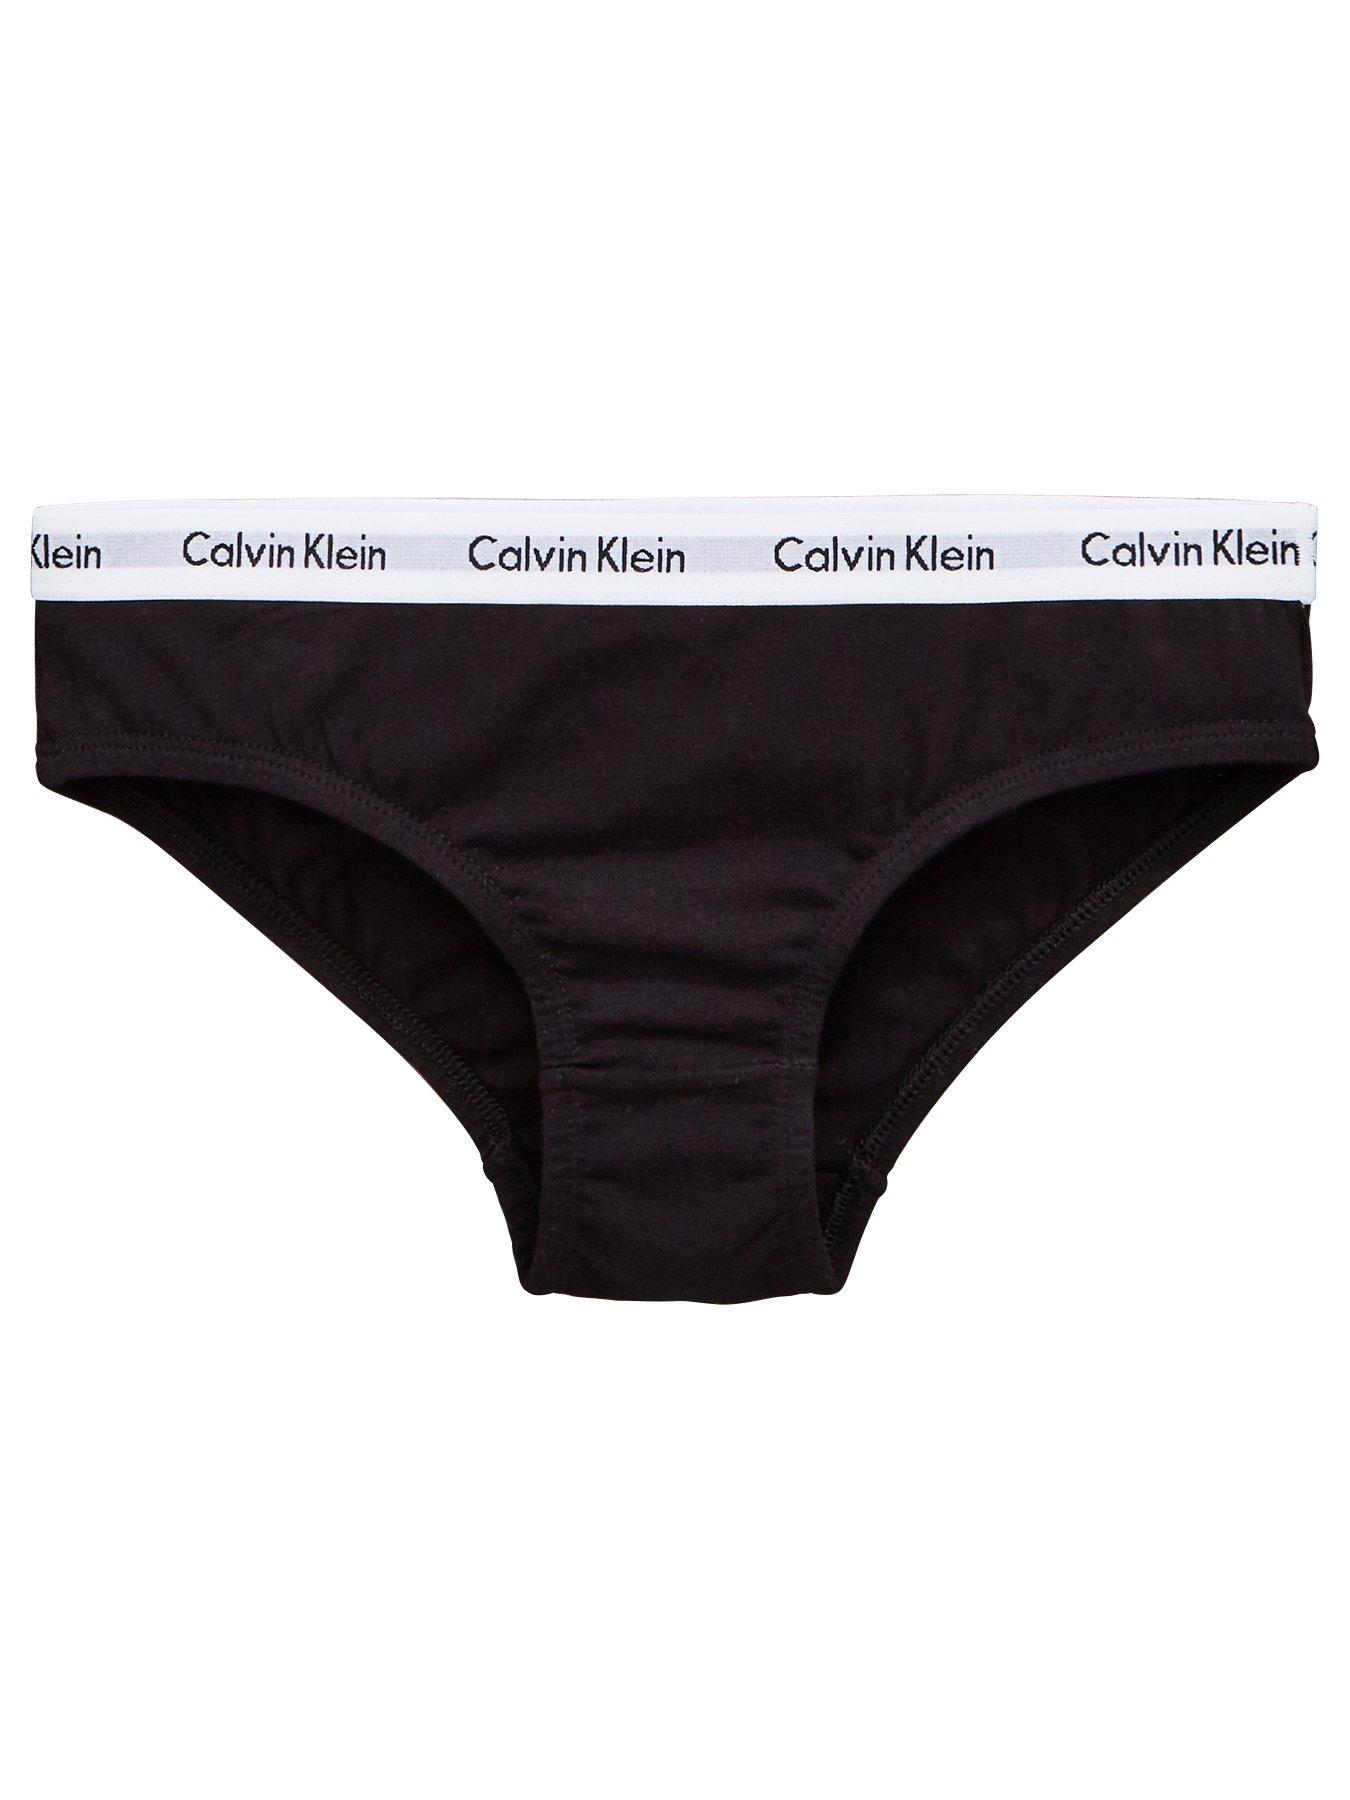 Calvin Klein - Girls Black & White Cotton Knickers (2 Pack